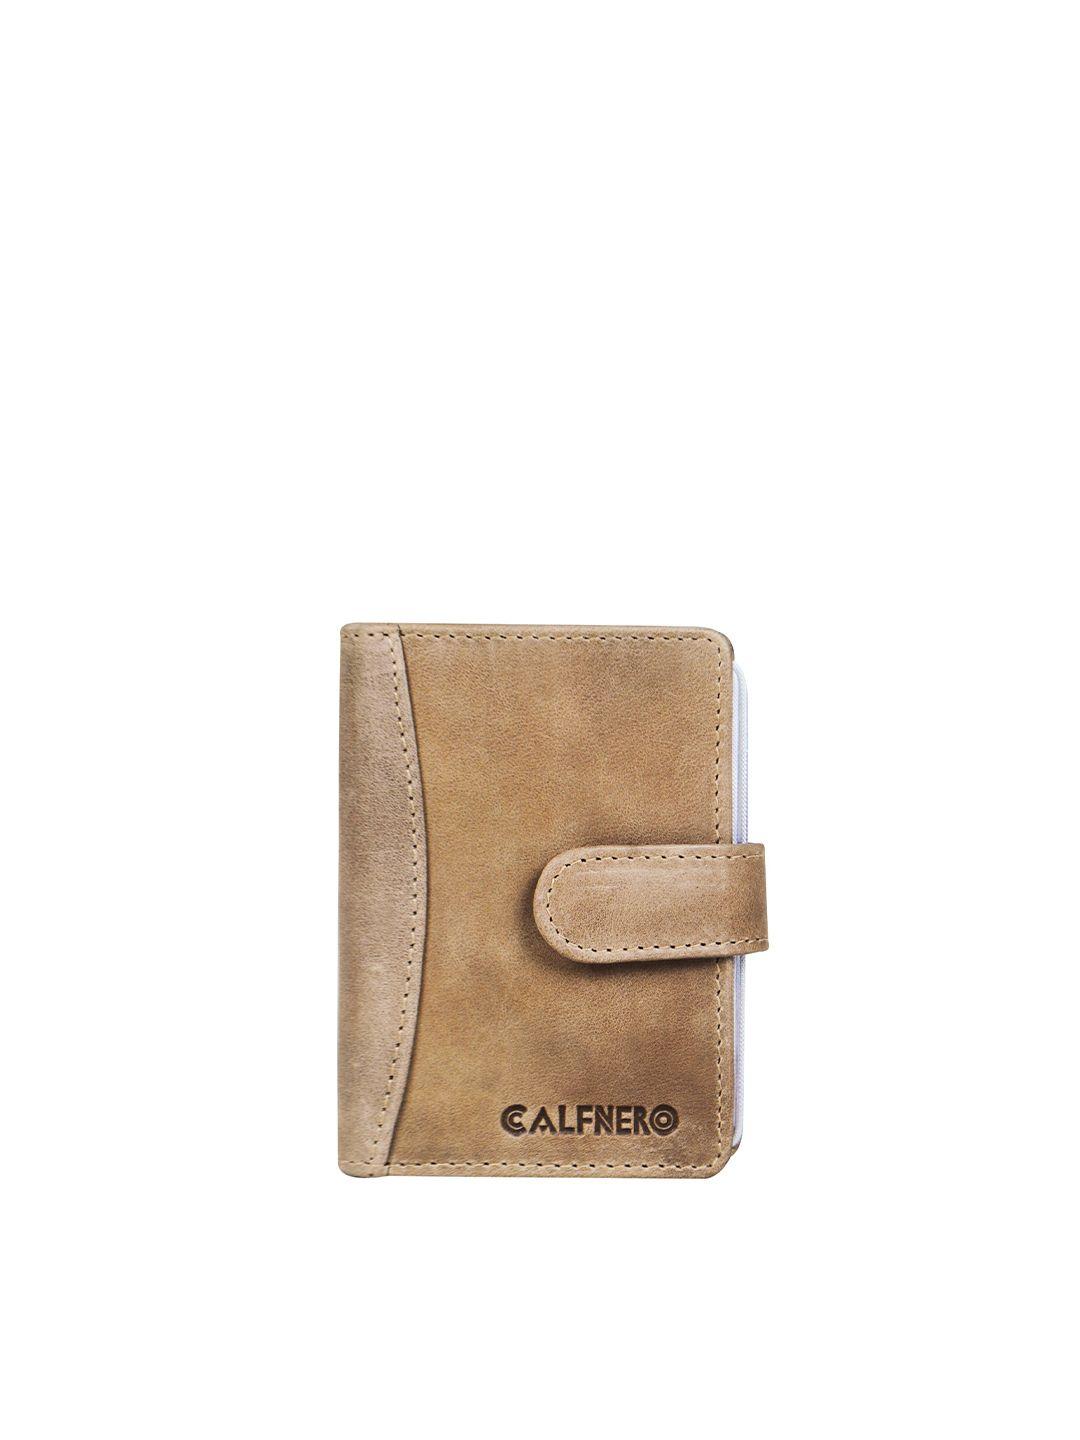 calfnero unisex grey & brown leather card holder